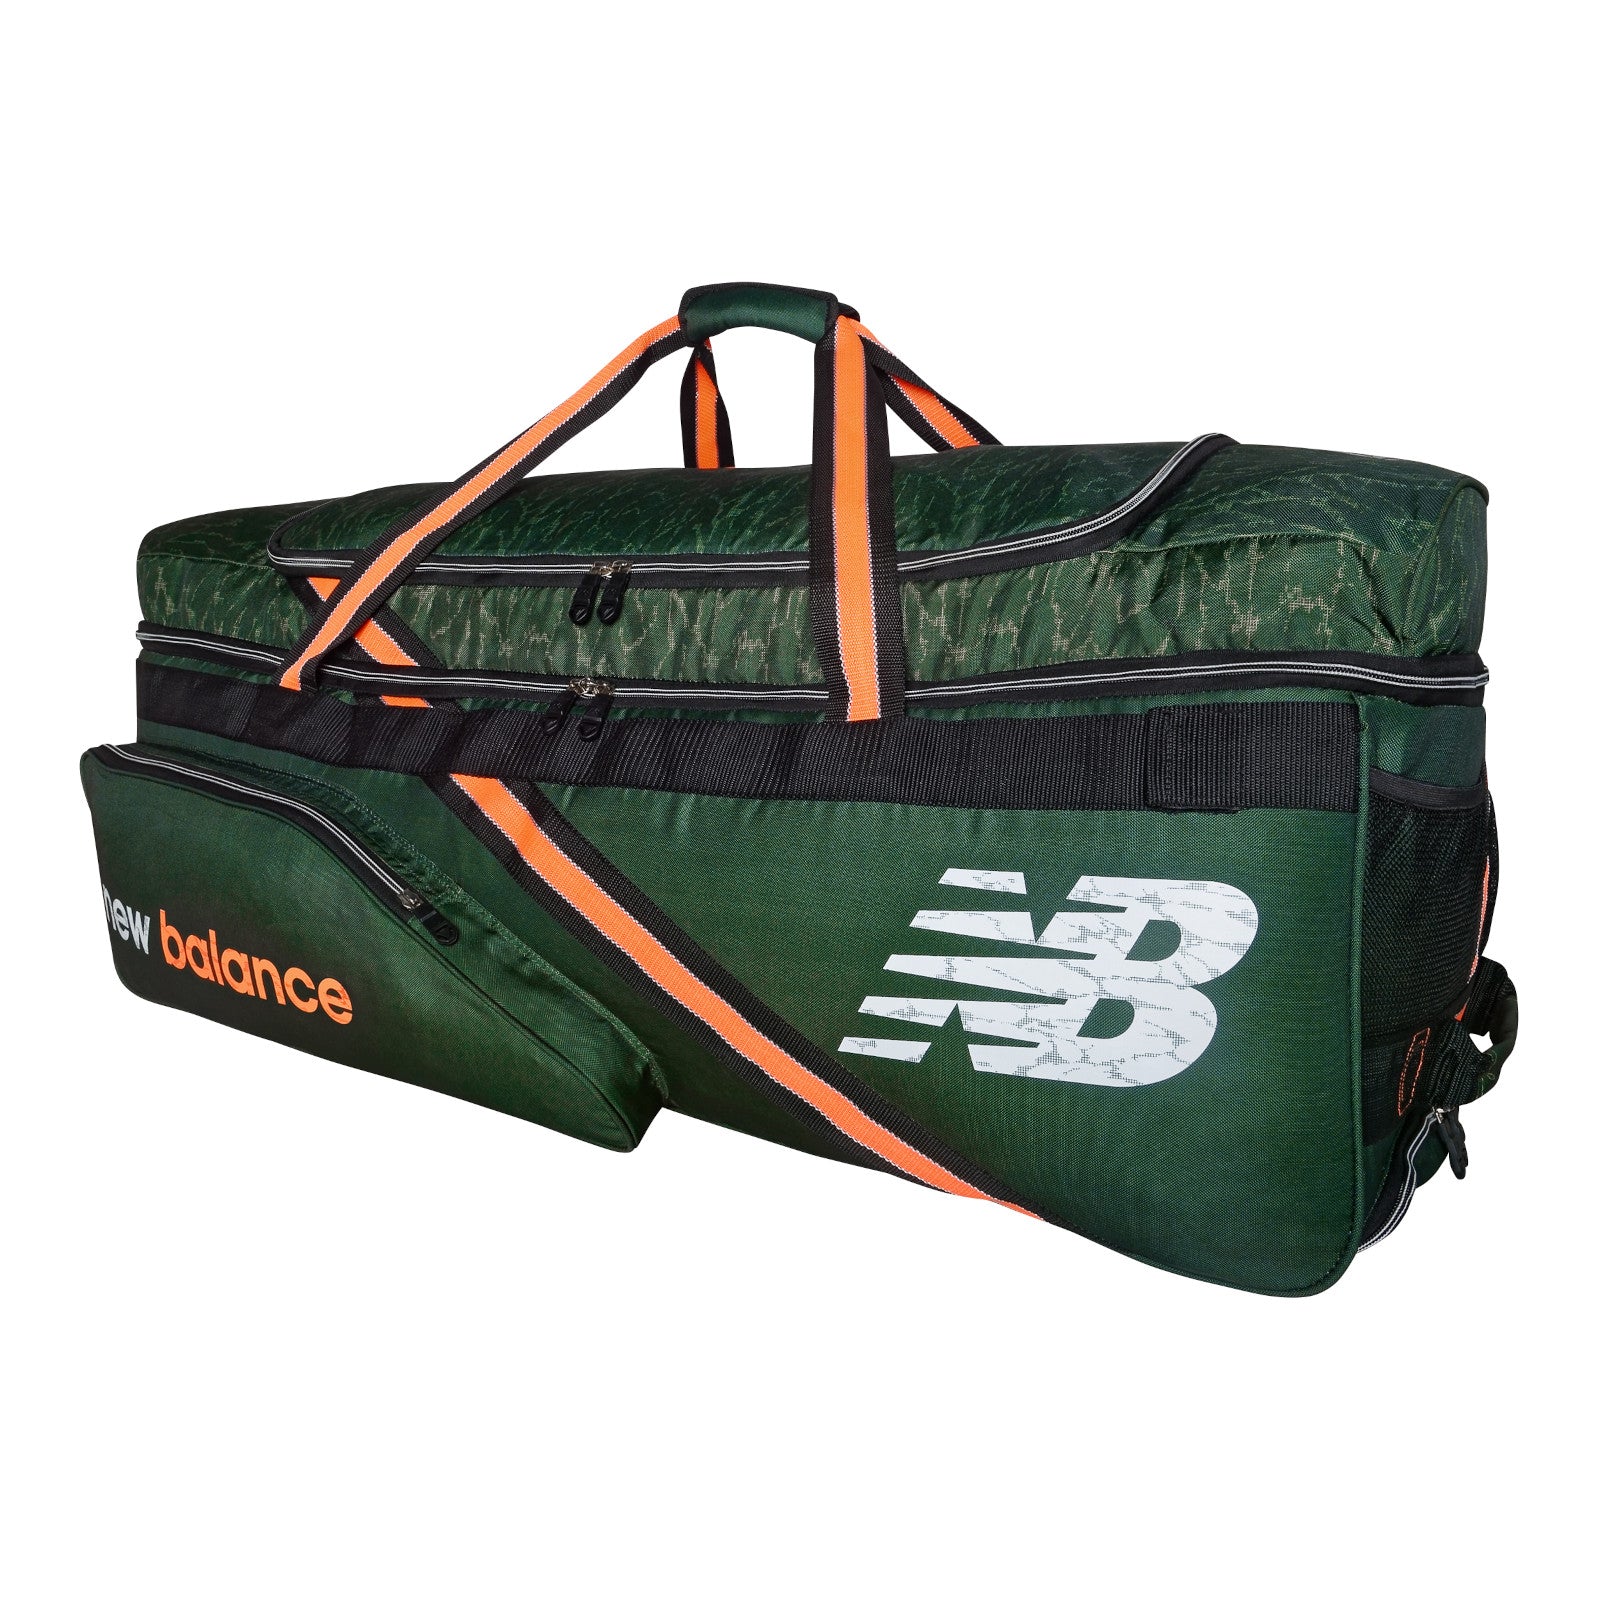 New Balance DC 880 Cricket Wheel Kit Bag